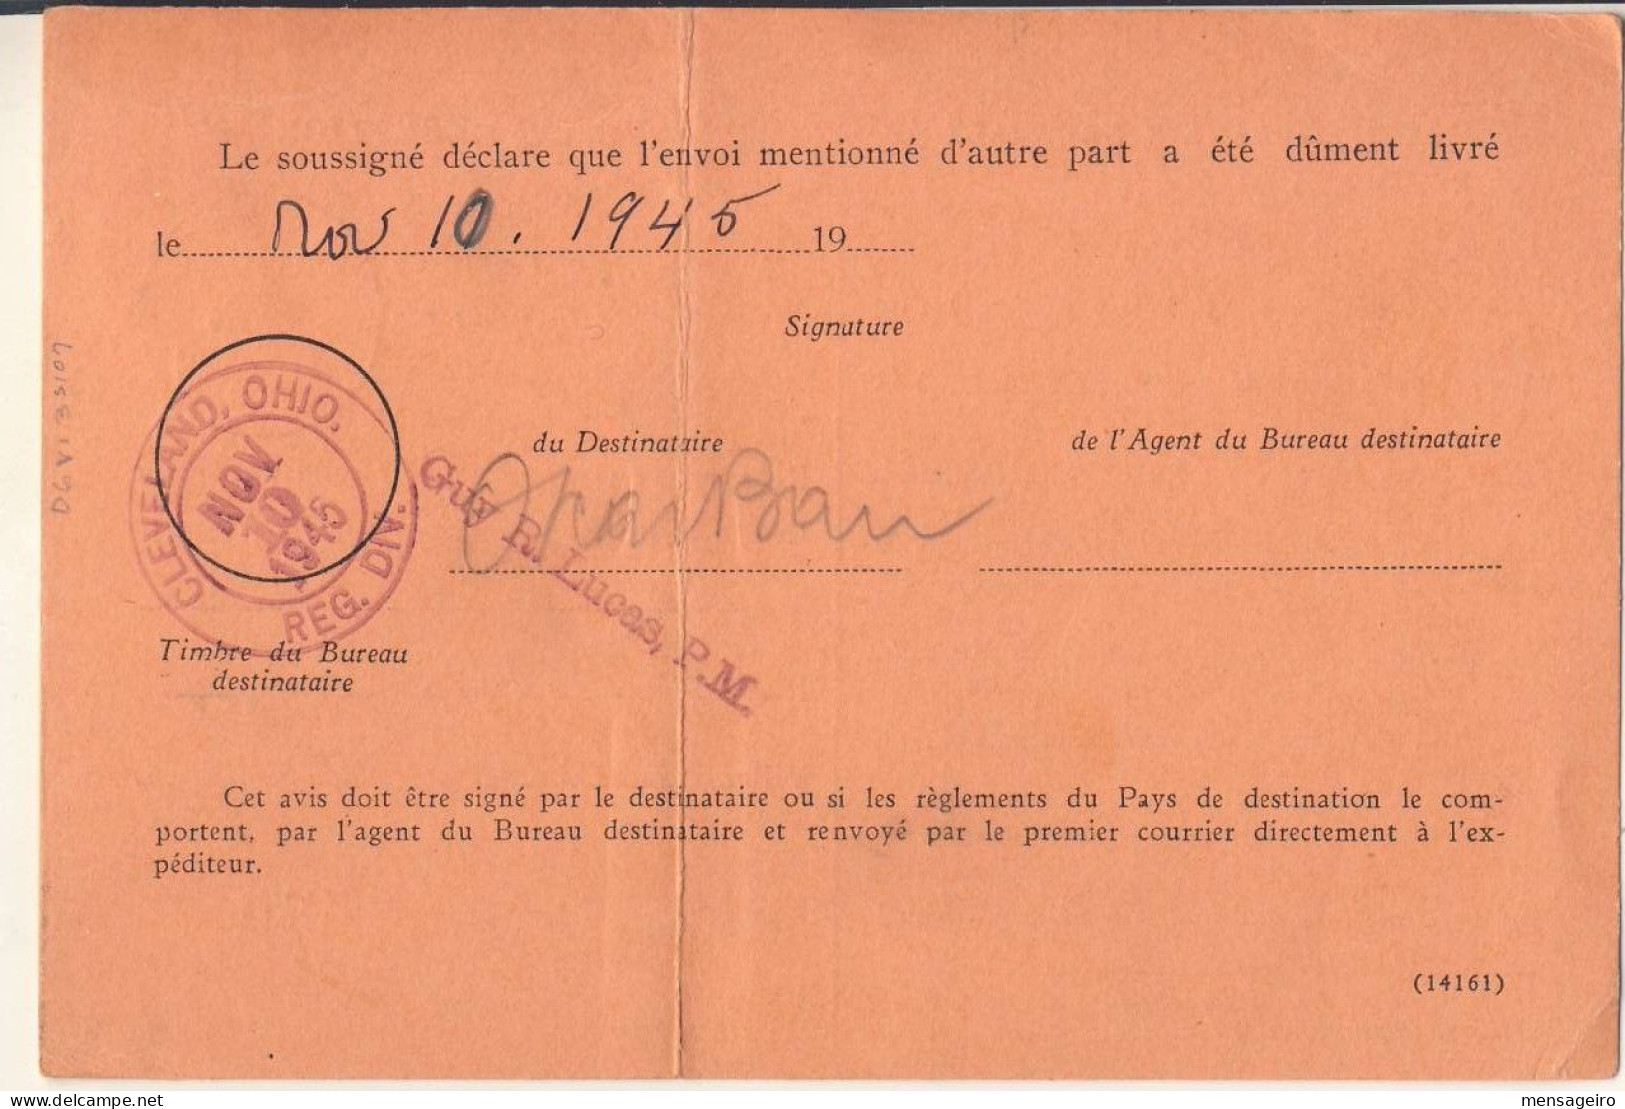 (C01) - HAITI - Y&T N° PA25 - SCOTT N°C026 AVIS DE RECEPTION ADVICE OF RECEIPT - P AU P 1945 - Haïti